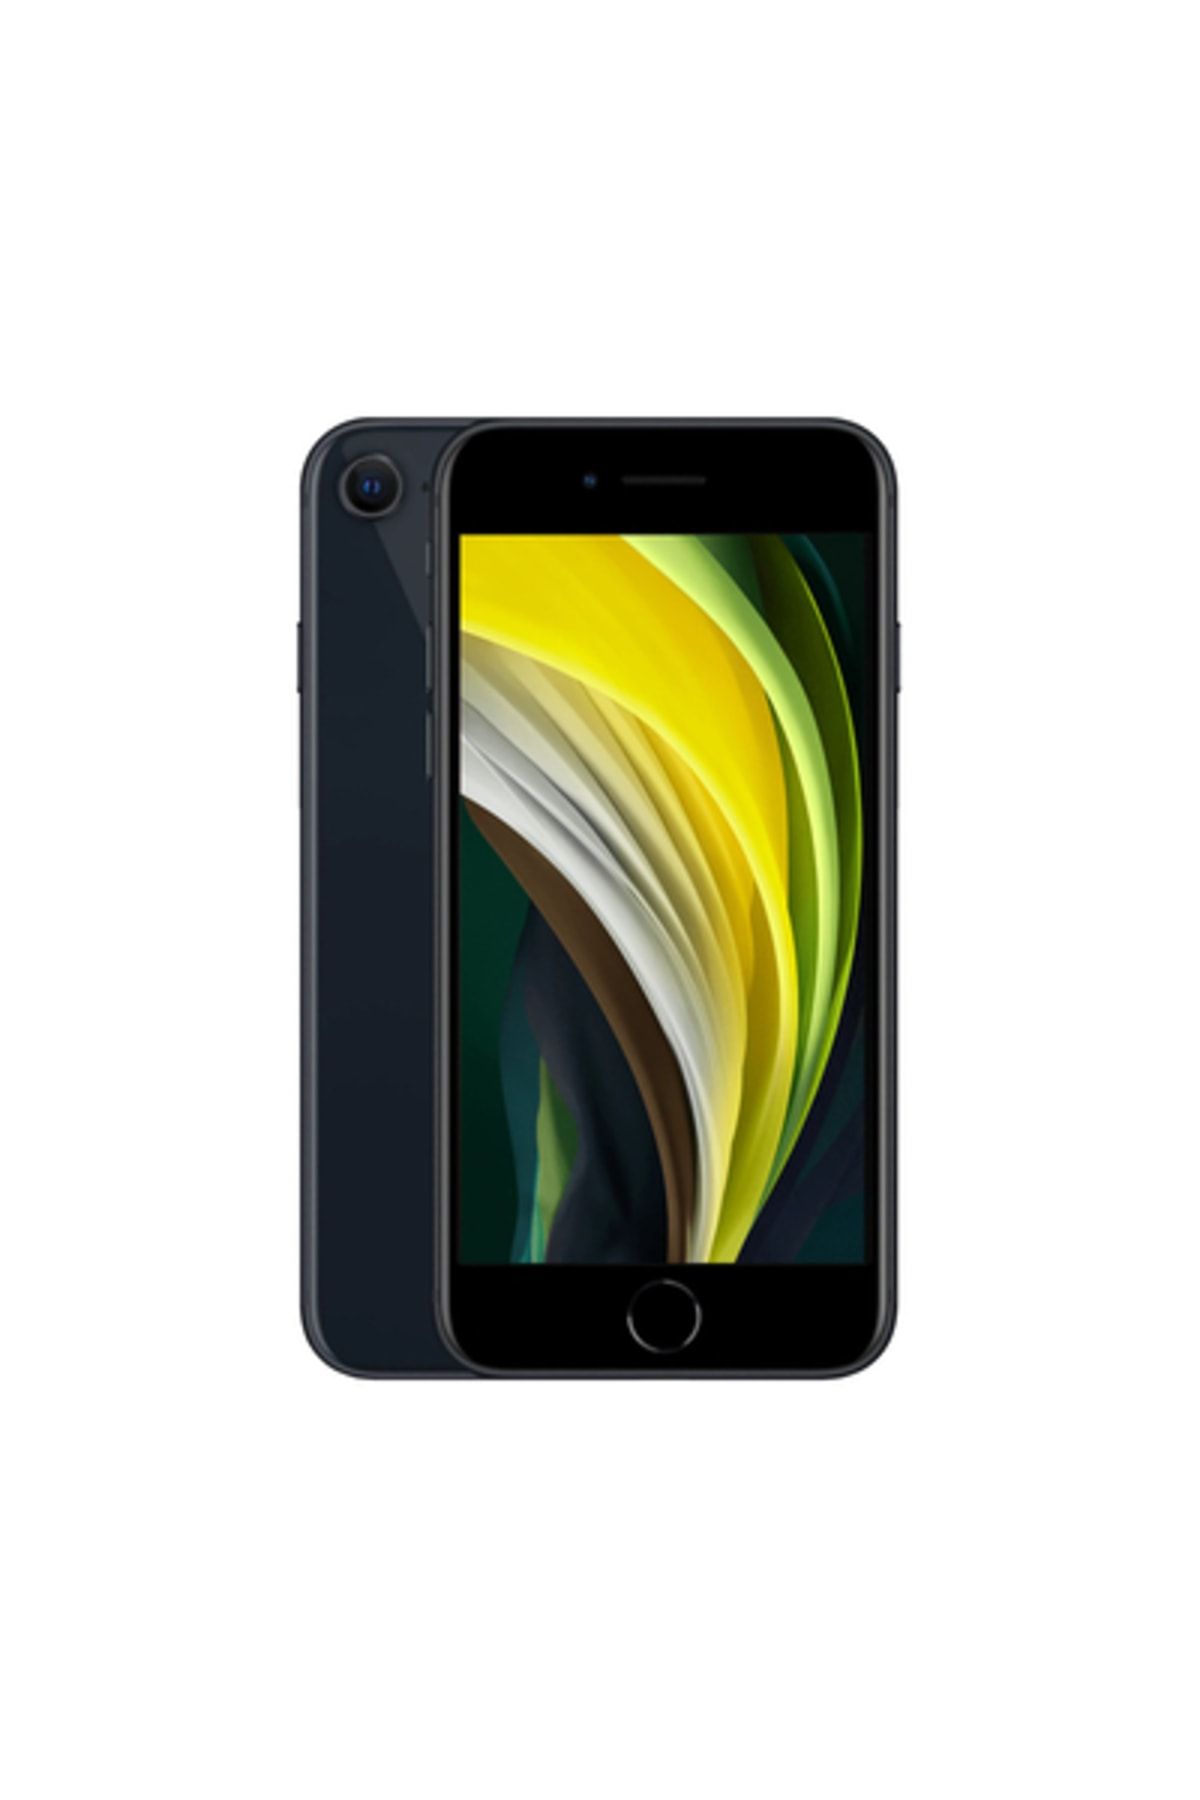 Yenilenmiş Apple iPhone 4 - 8 GB - Siyah - Getmobil